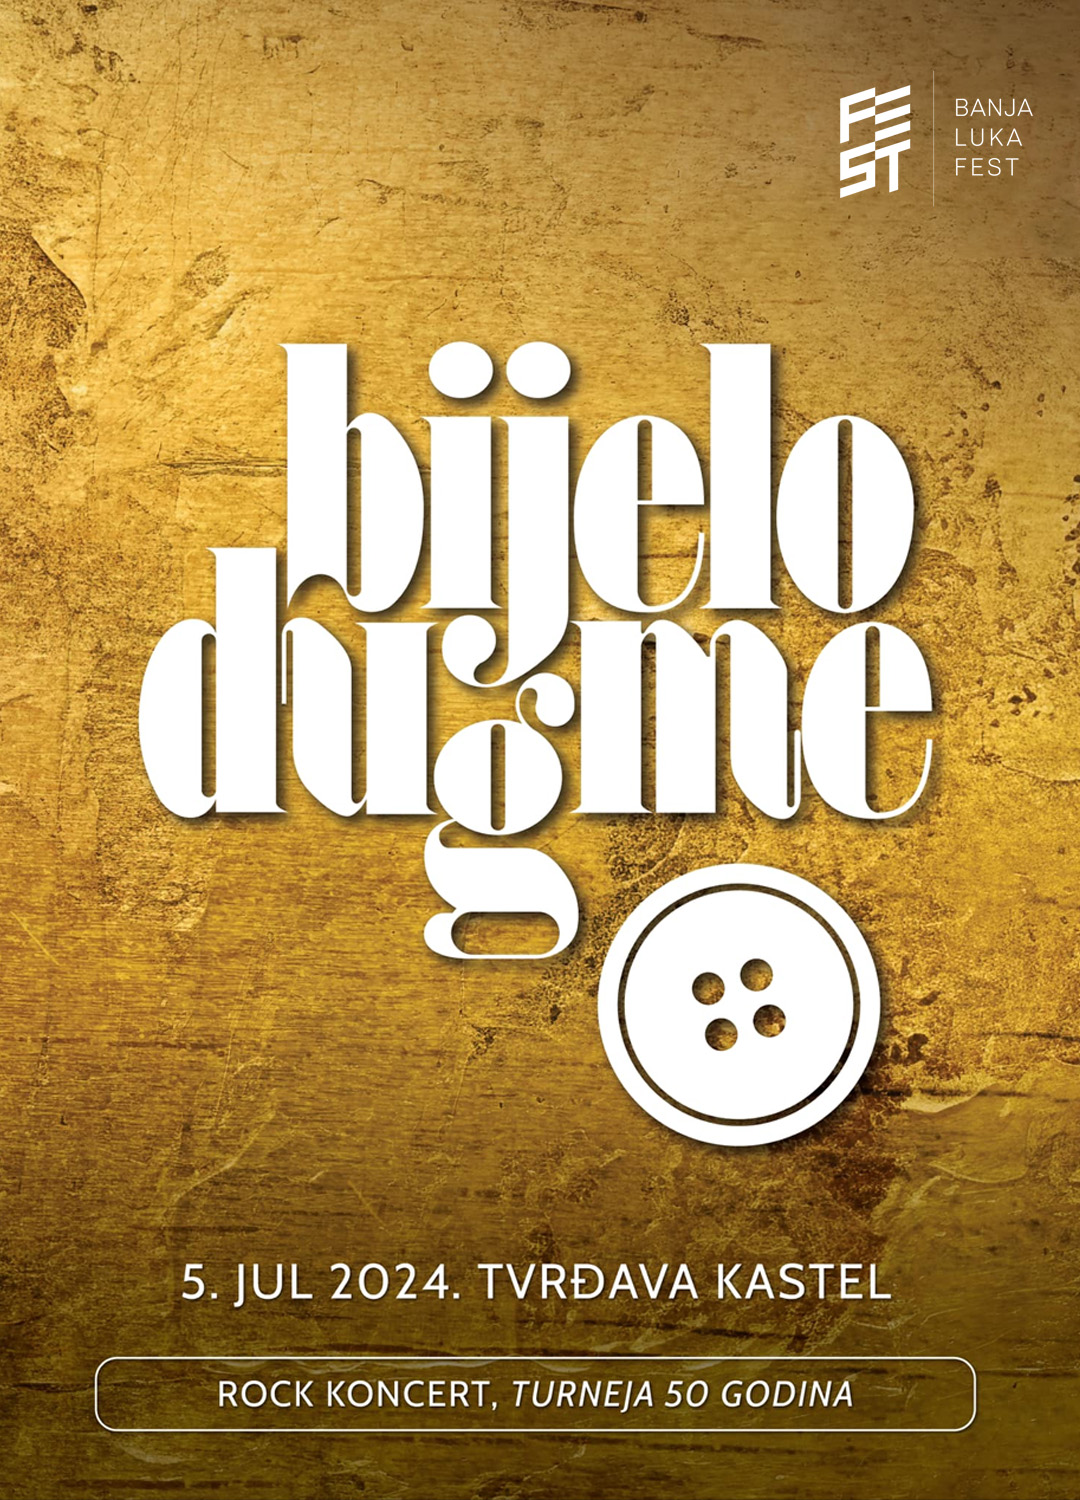 Banja Luka Fest 2024 - Bijelo dugme